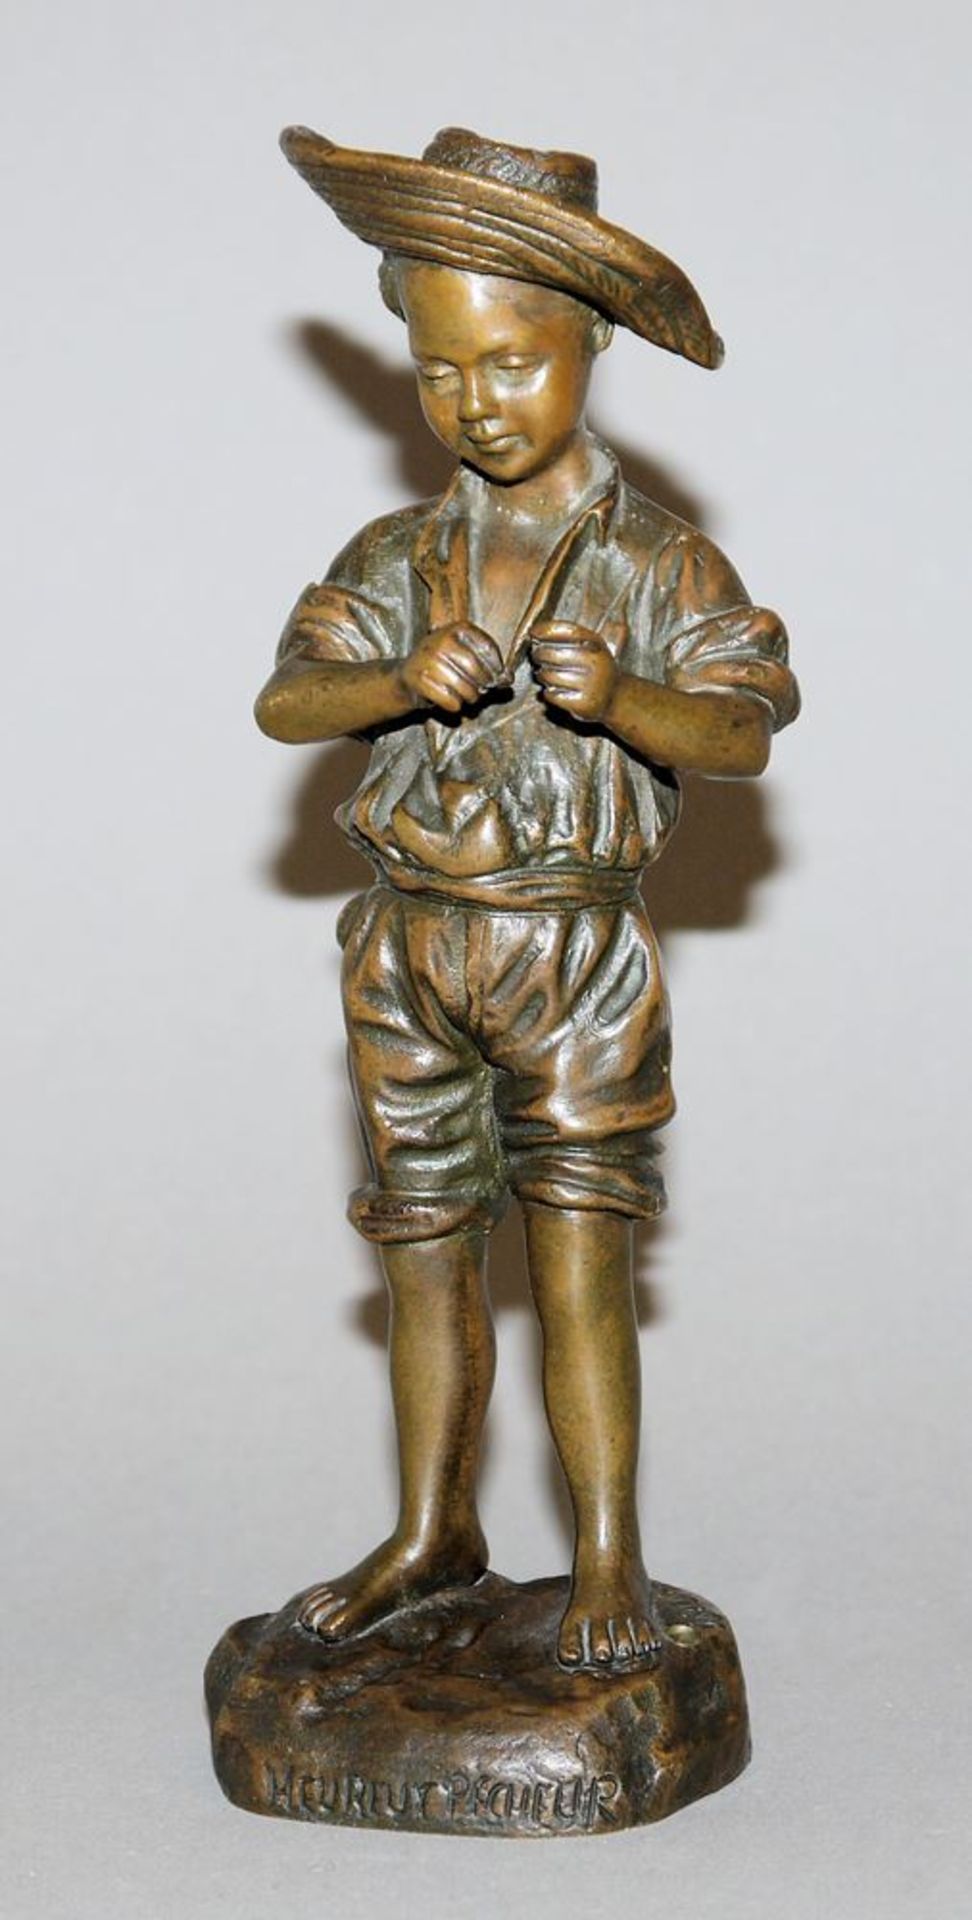 J. Bastiane, "Heureur pecheur", Bronzeplastik, Frankreich 19. Jh.